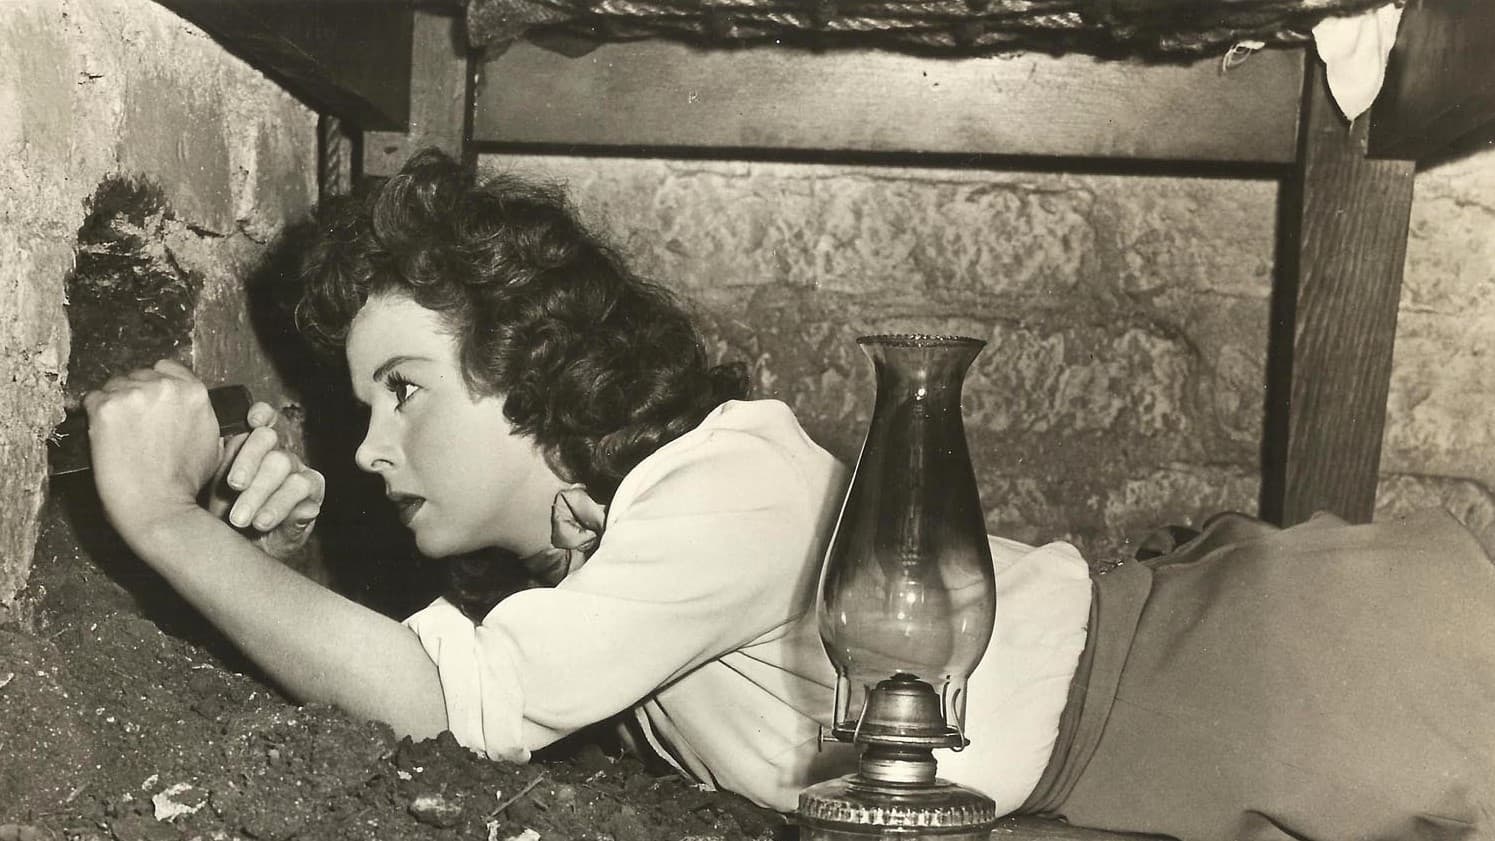 Rawhide (1951)